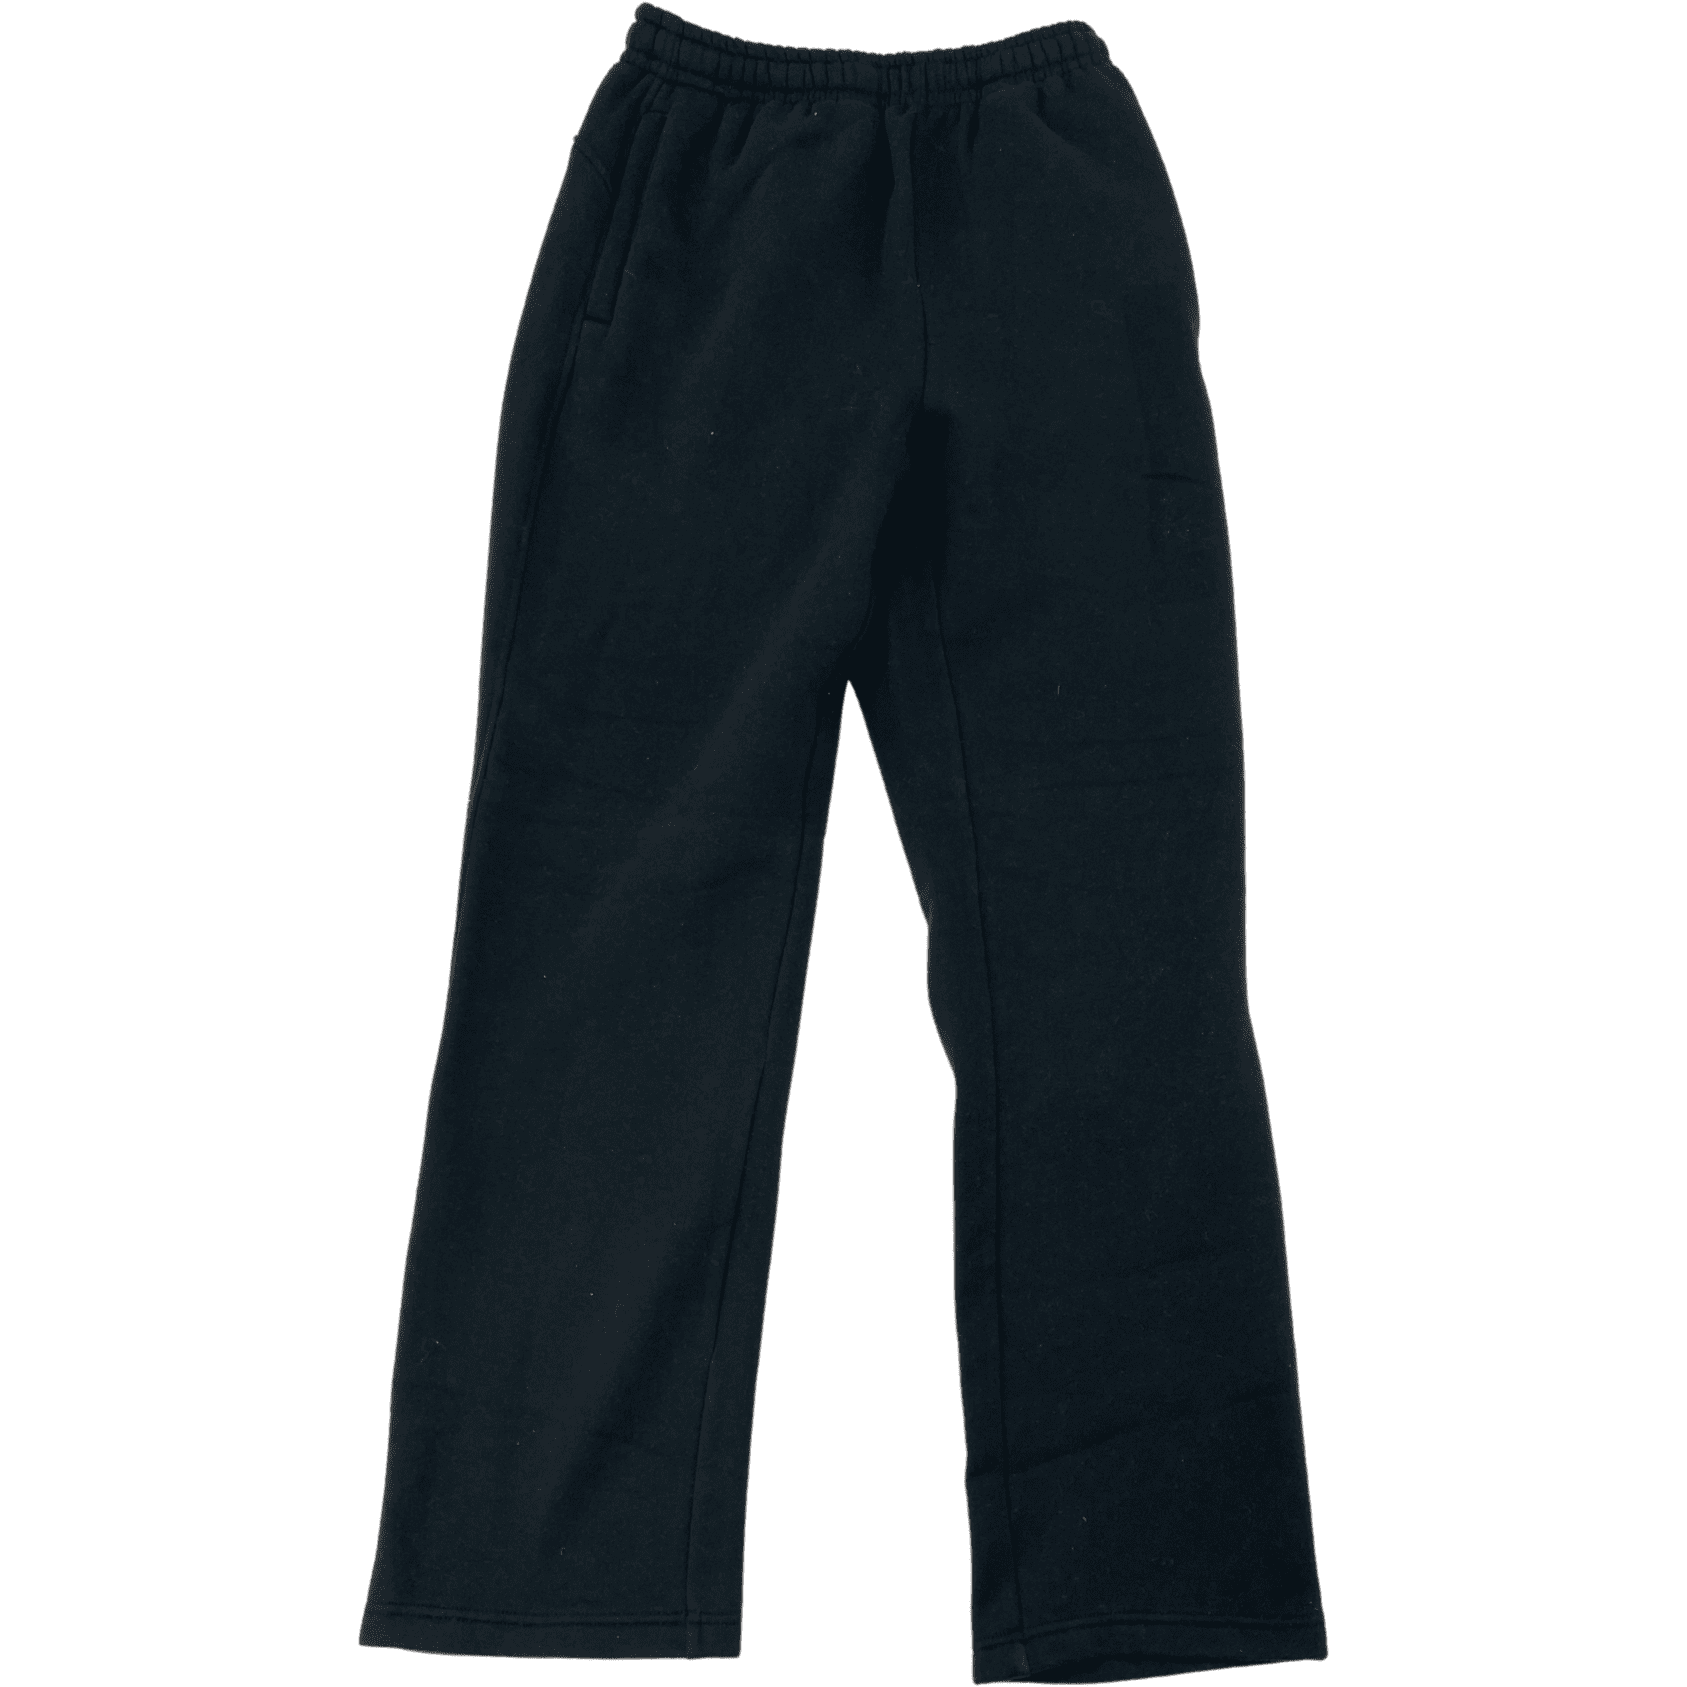 Fila Men's Sweatpants / Jogger / Black / Size Small